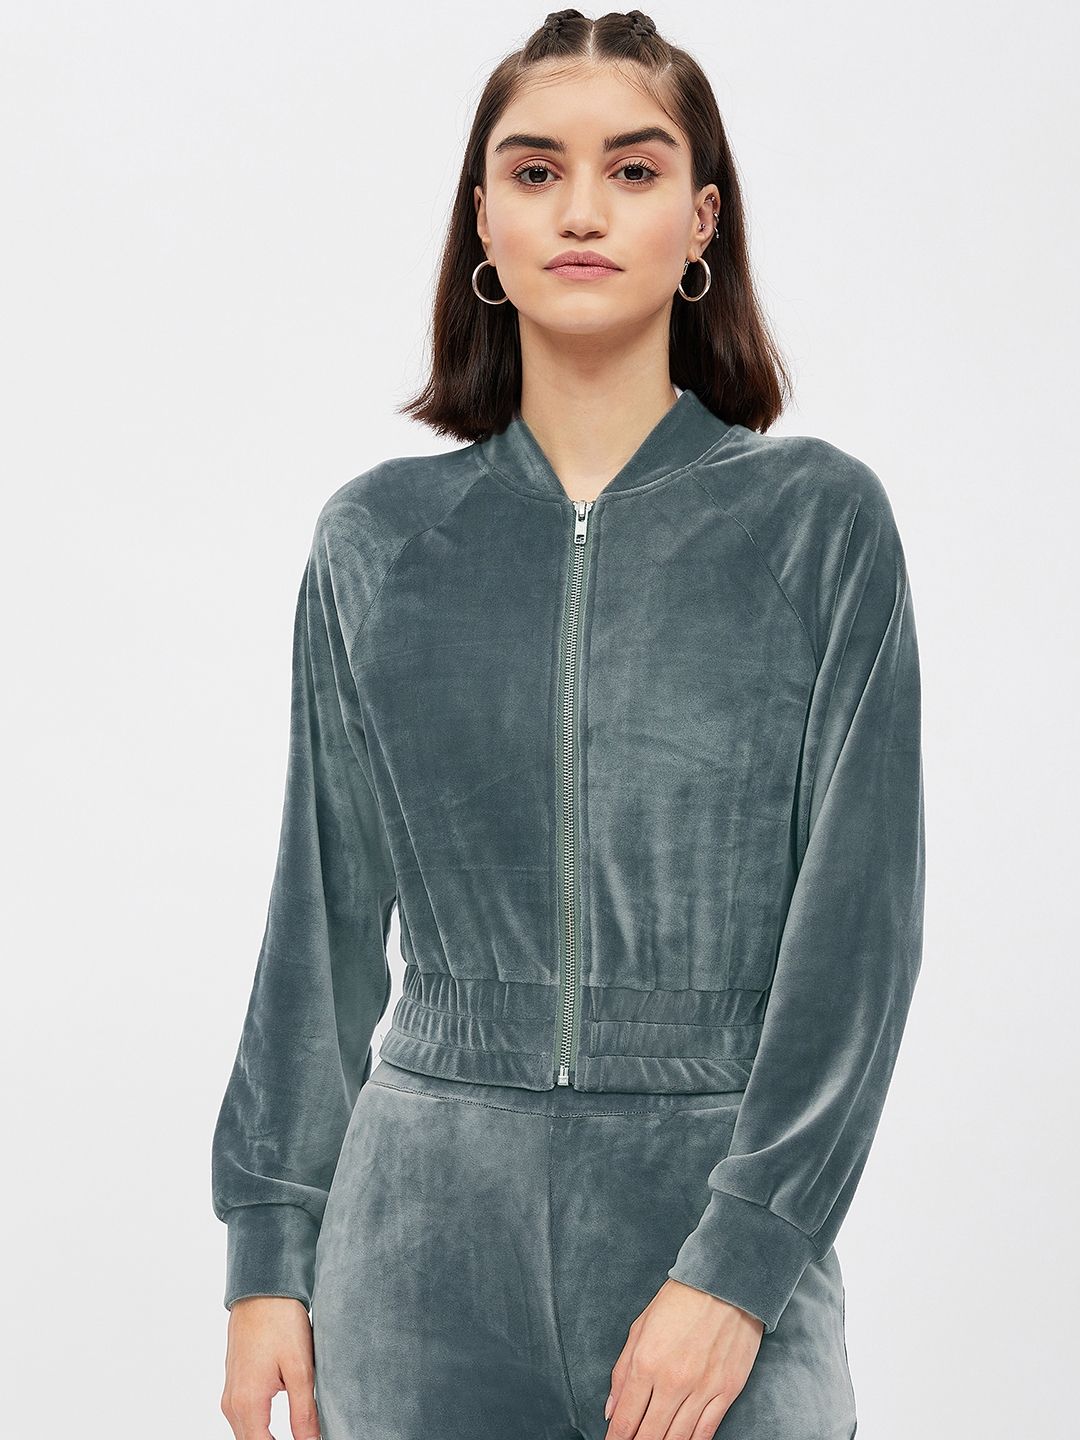 Harpa Women Grey Sweatshirt Price in India